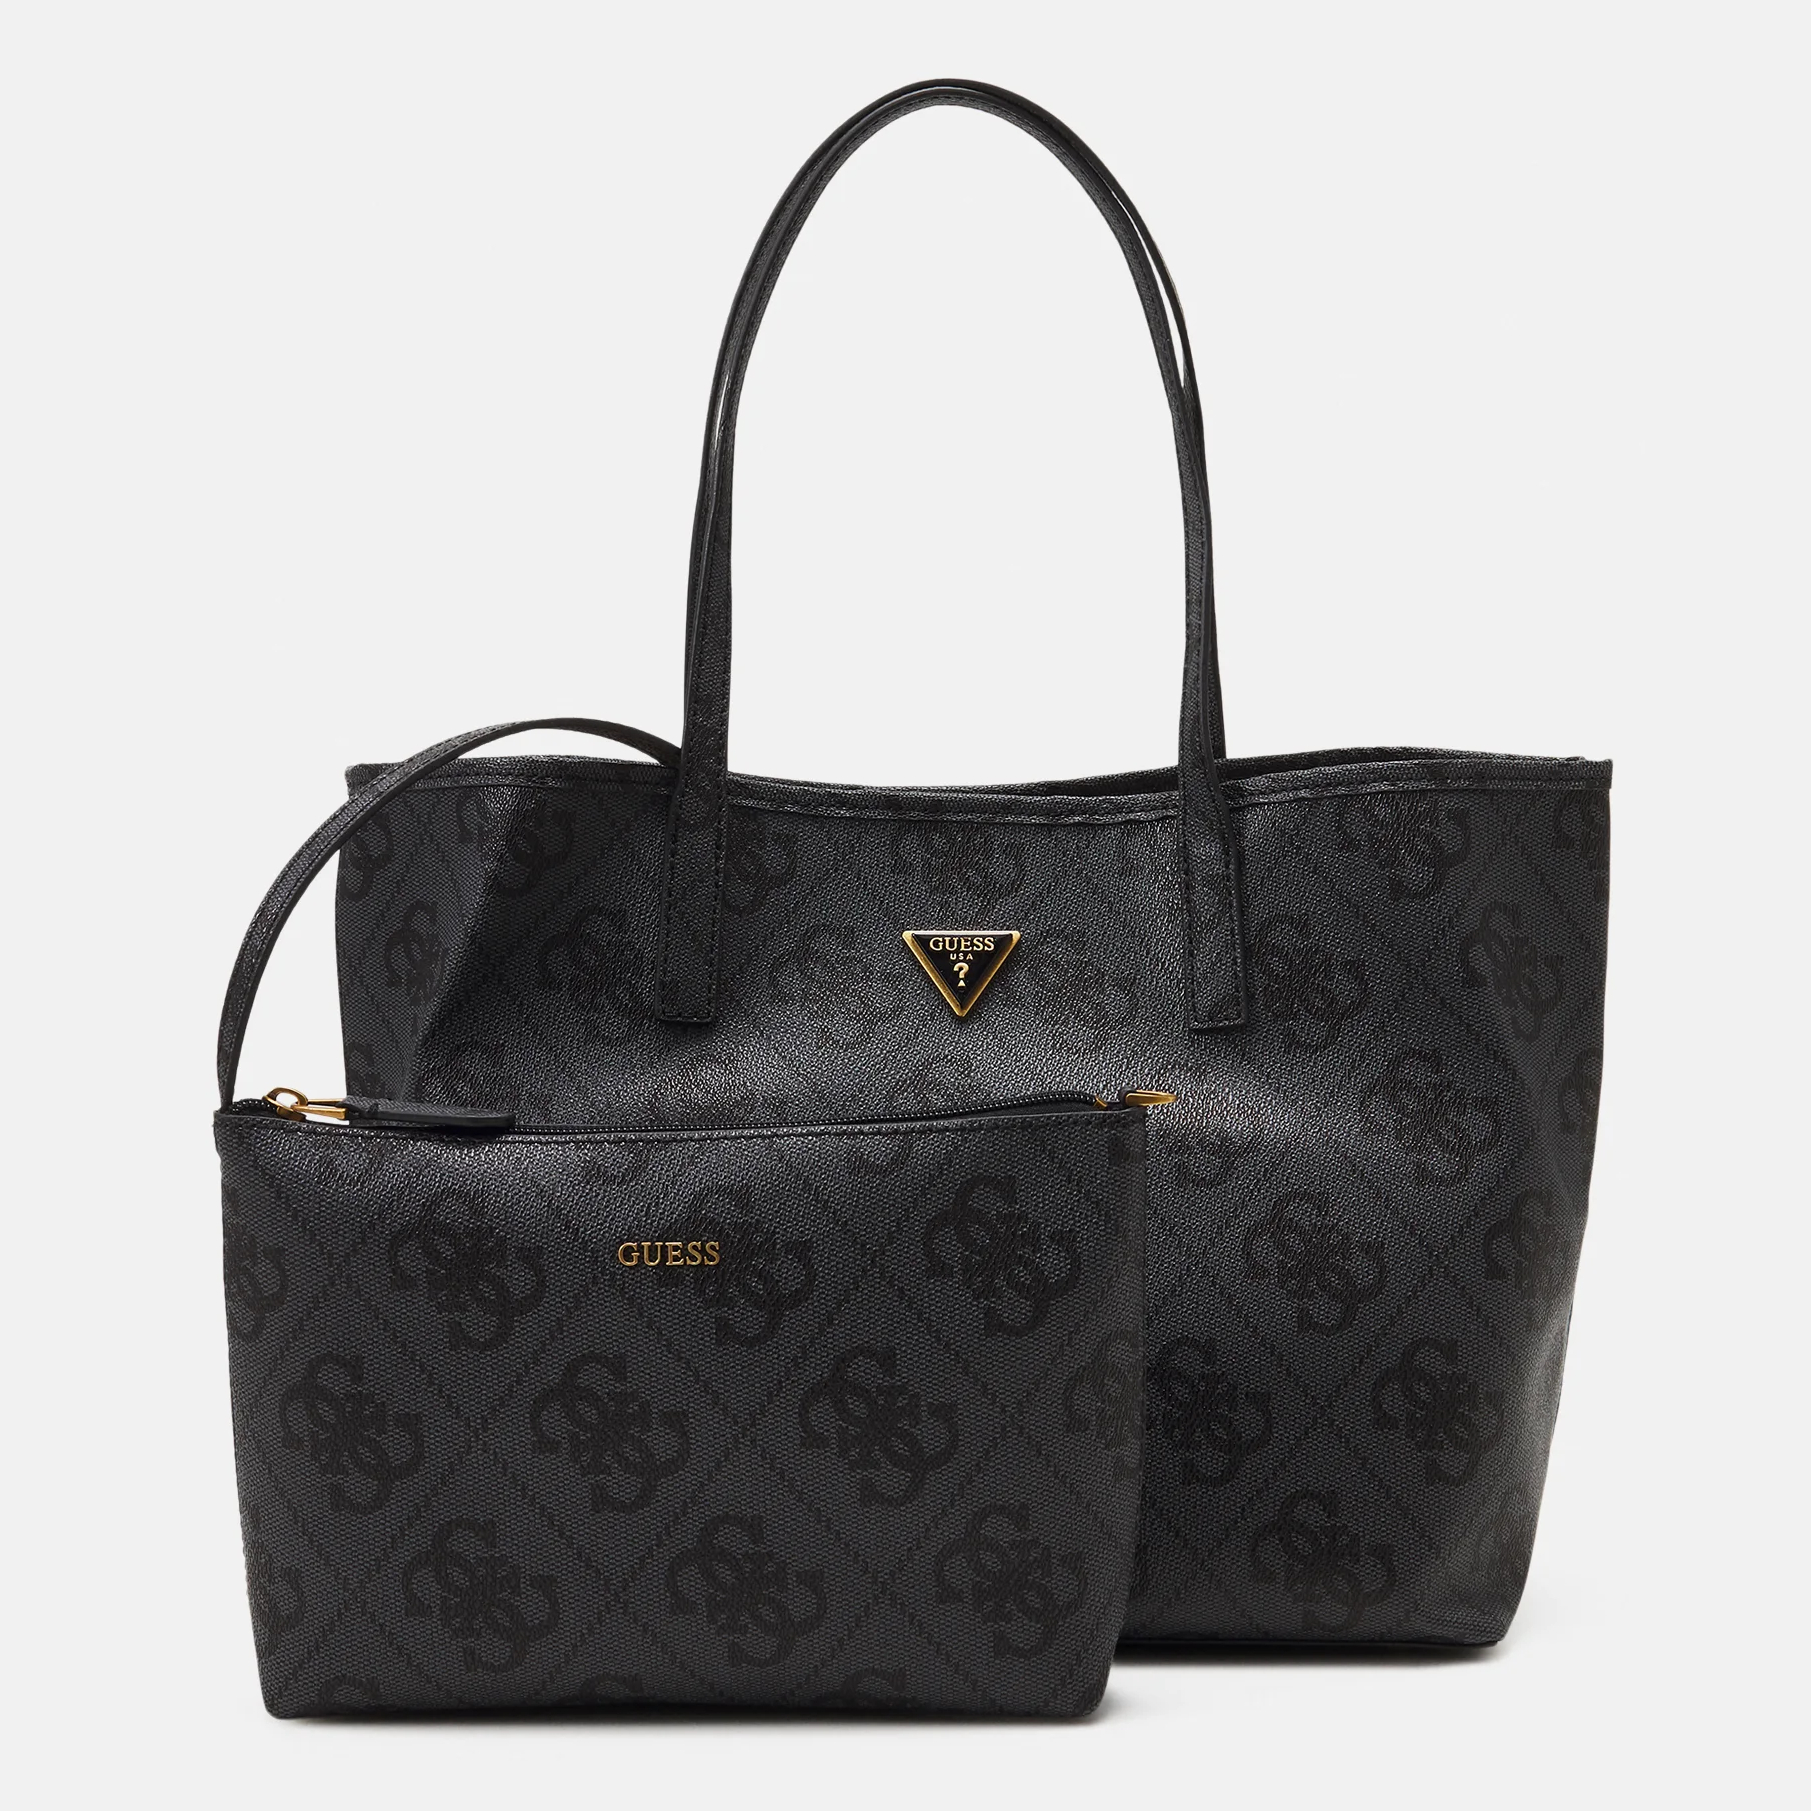 комплект сумок guess vikky geometric print 2 предмета малиновый Комплект сумок Guess Vikky 4G Logo, 2 предмета, темно-серый